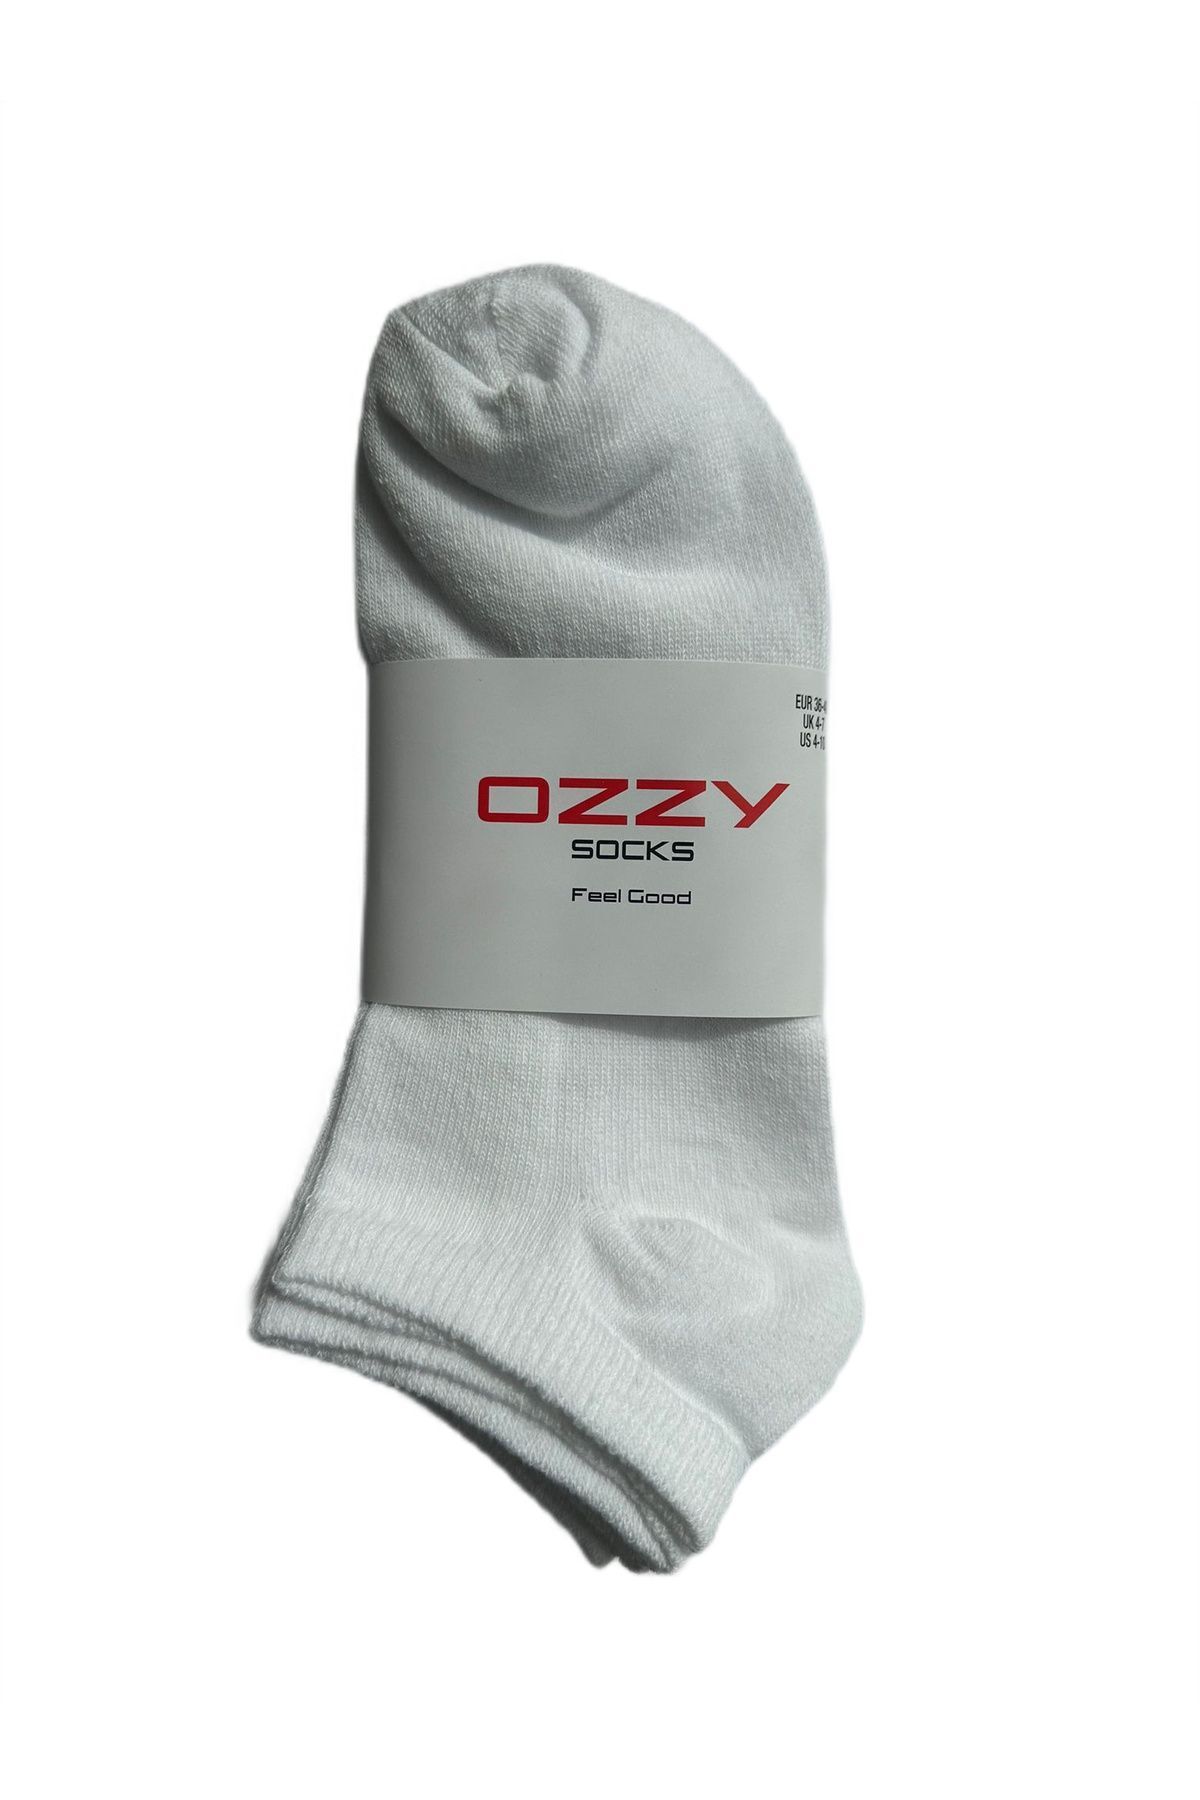 Ozzy Socks 8 Çift Ekonomik Pamuklu Beyaz Erkek Patik